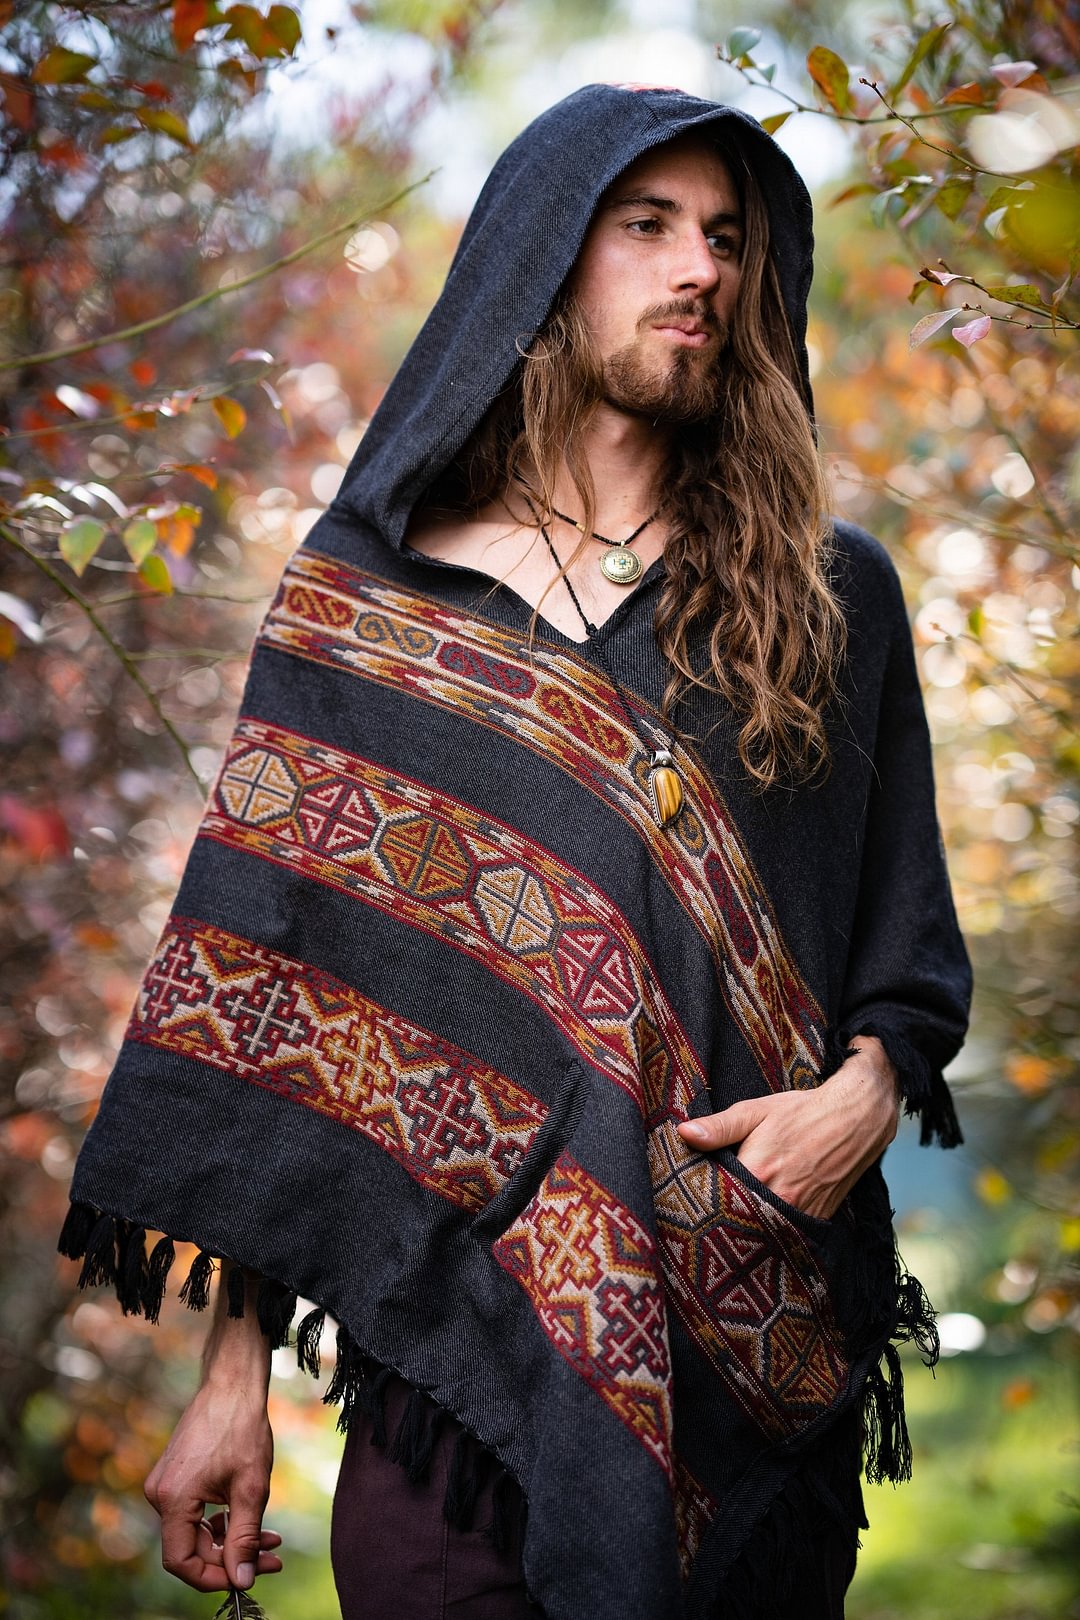 Men's Hooded Yak Wool Poncho Dark Grey Pockets Tribal Embroidery Celtic Gypsy Alternative Festival Rave Mexican Primitive Large Hood